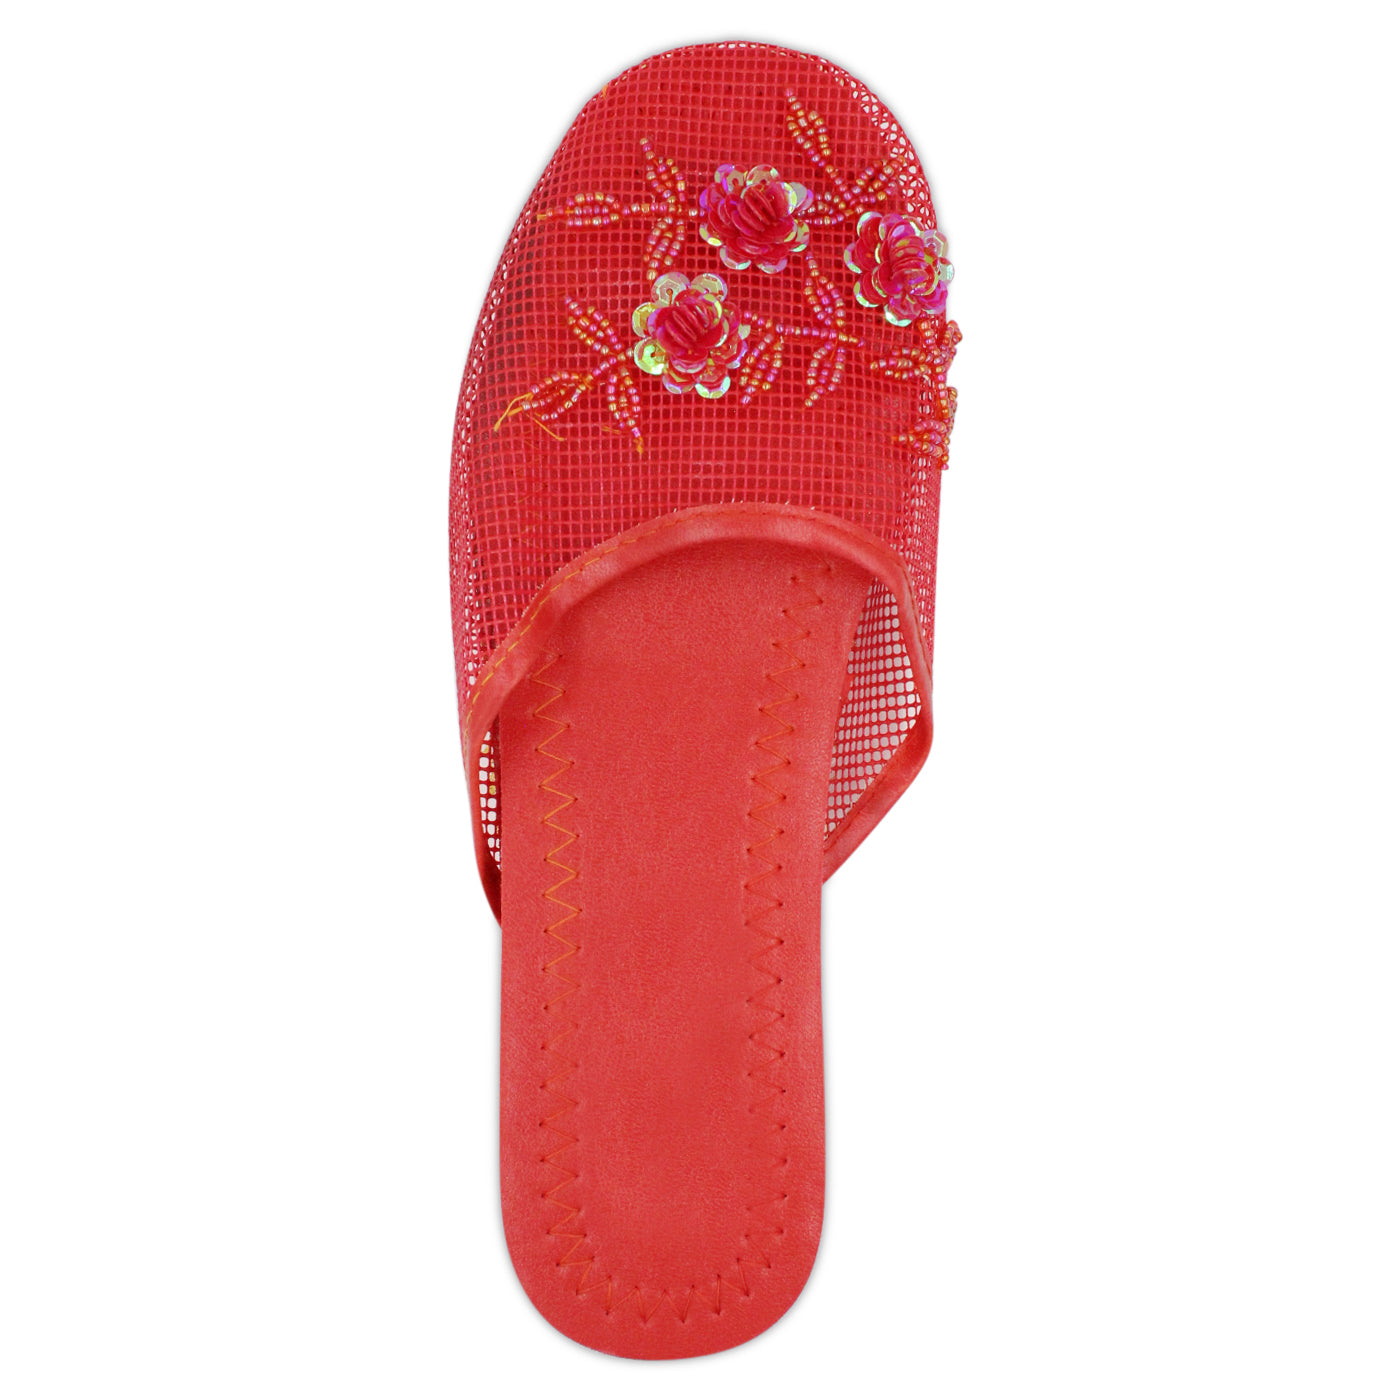 LAVRA Women's Flip Flops Bling Beach Summer Glitter Bridal Thong Sandals, Water Shoes Thong Sandal Slipper